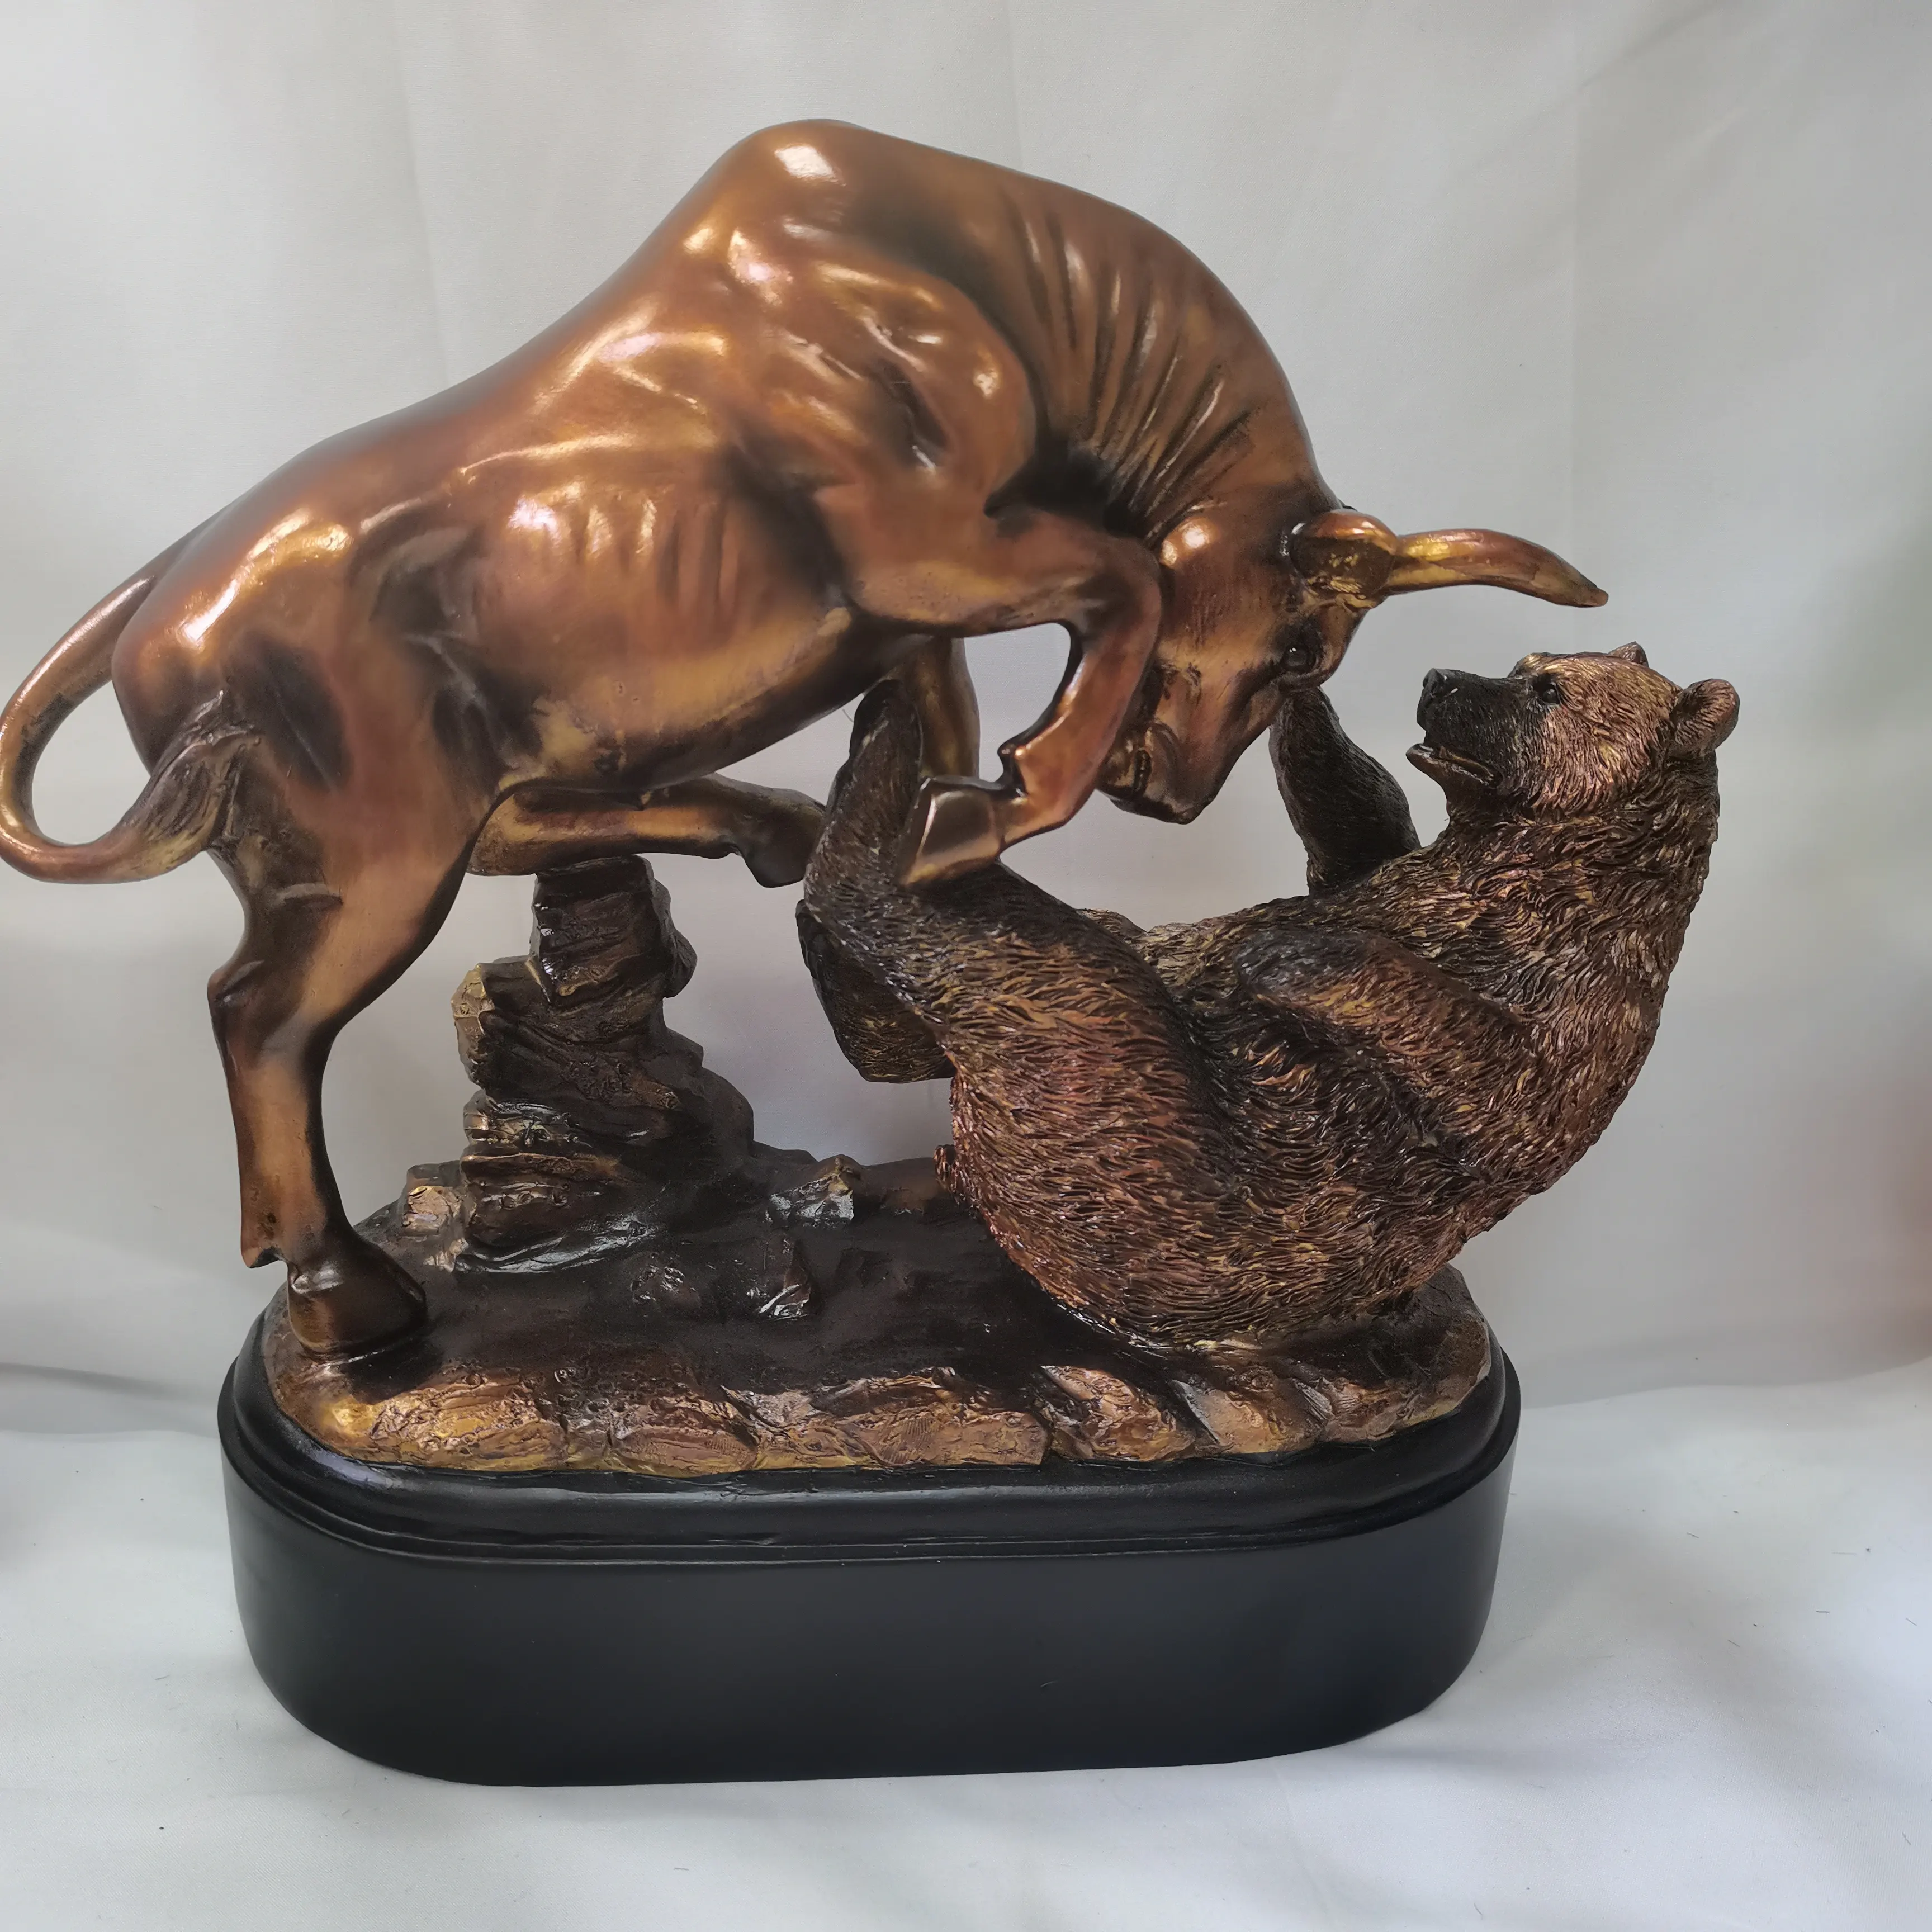 Escultura de resina artesanal, resina galvanizada bronze bull & urso estátua de escultura 10 "w x 9.5" h